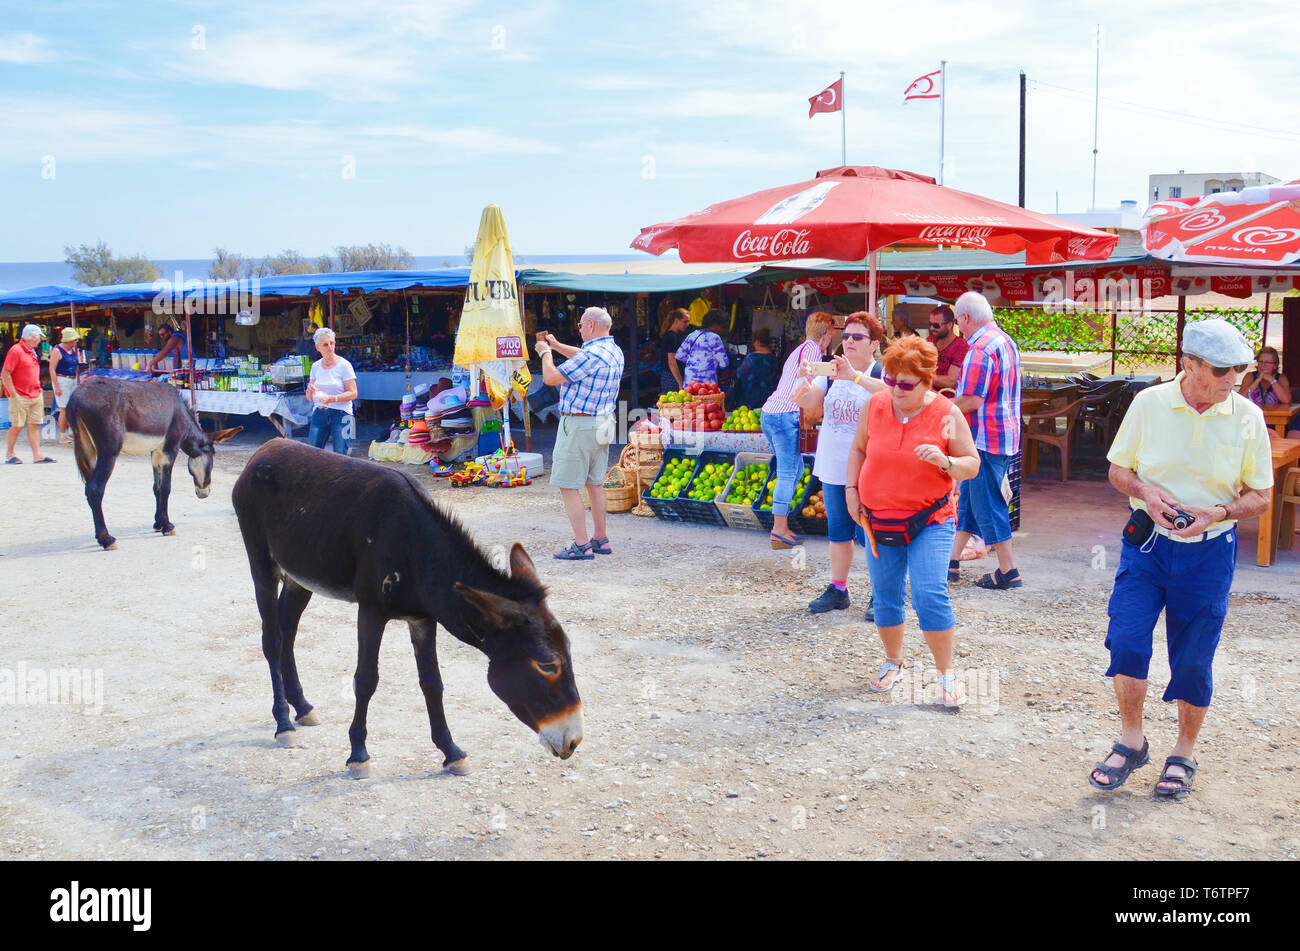 Dipkarpaz, Rizokarpaso, Karpas Peninsula, Turkish Northern Cyprus - Oct 3rd 2018: Older tourists taking pictures of wild donkeys on a street market. The animals are local tourist attraction. Stock Photo